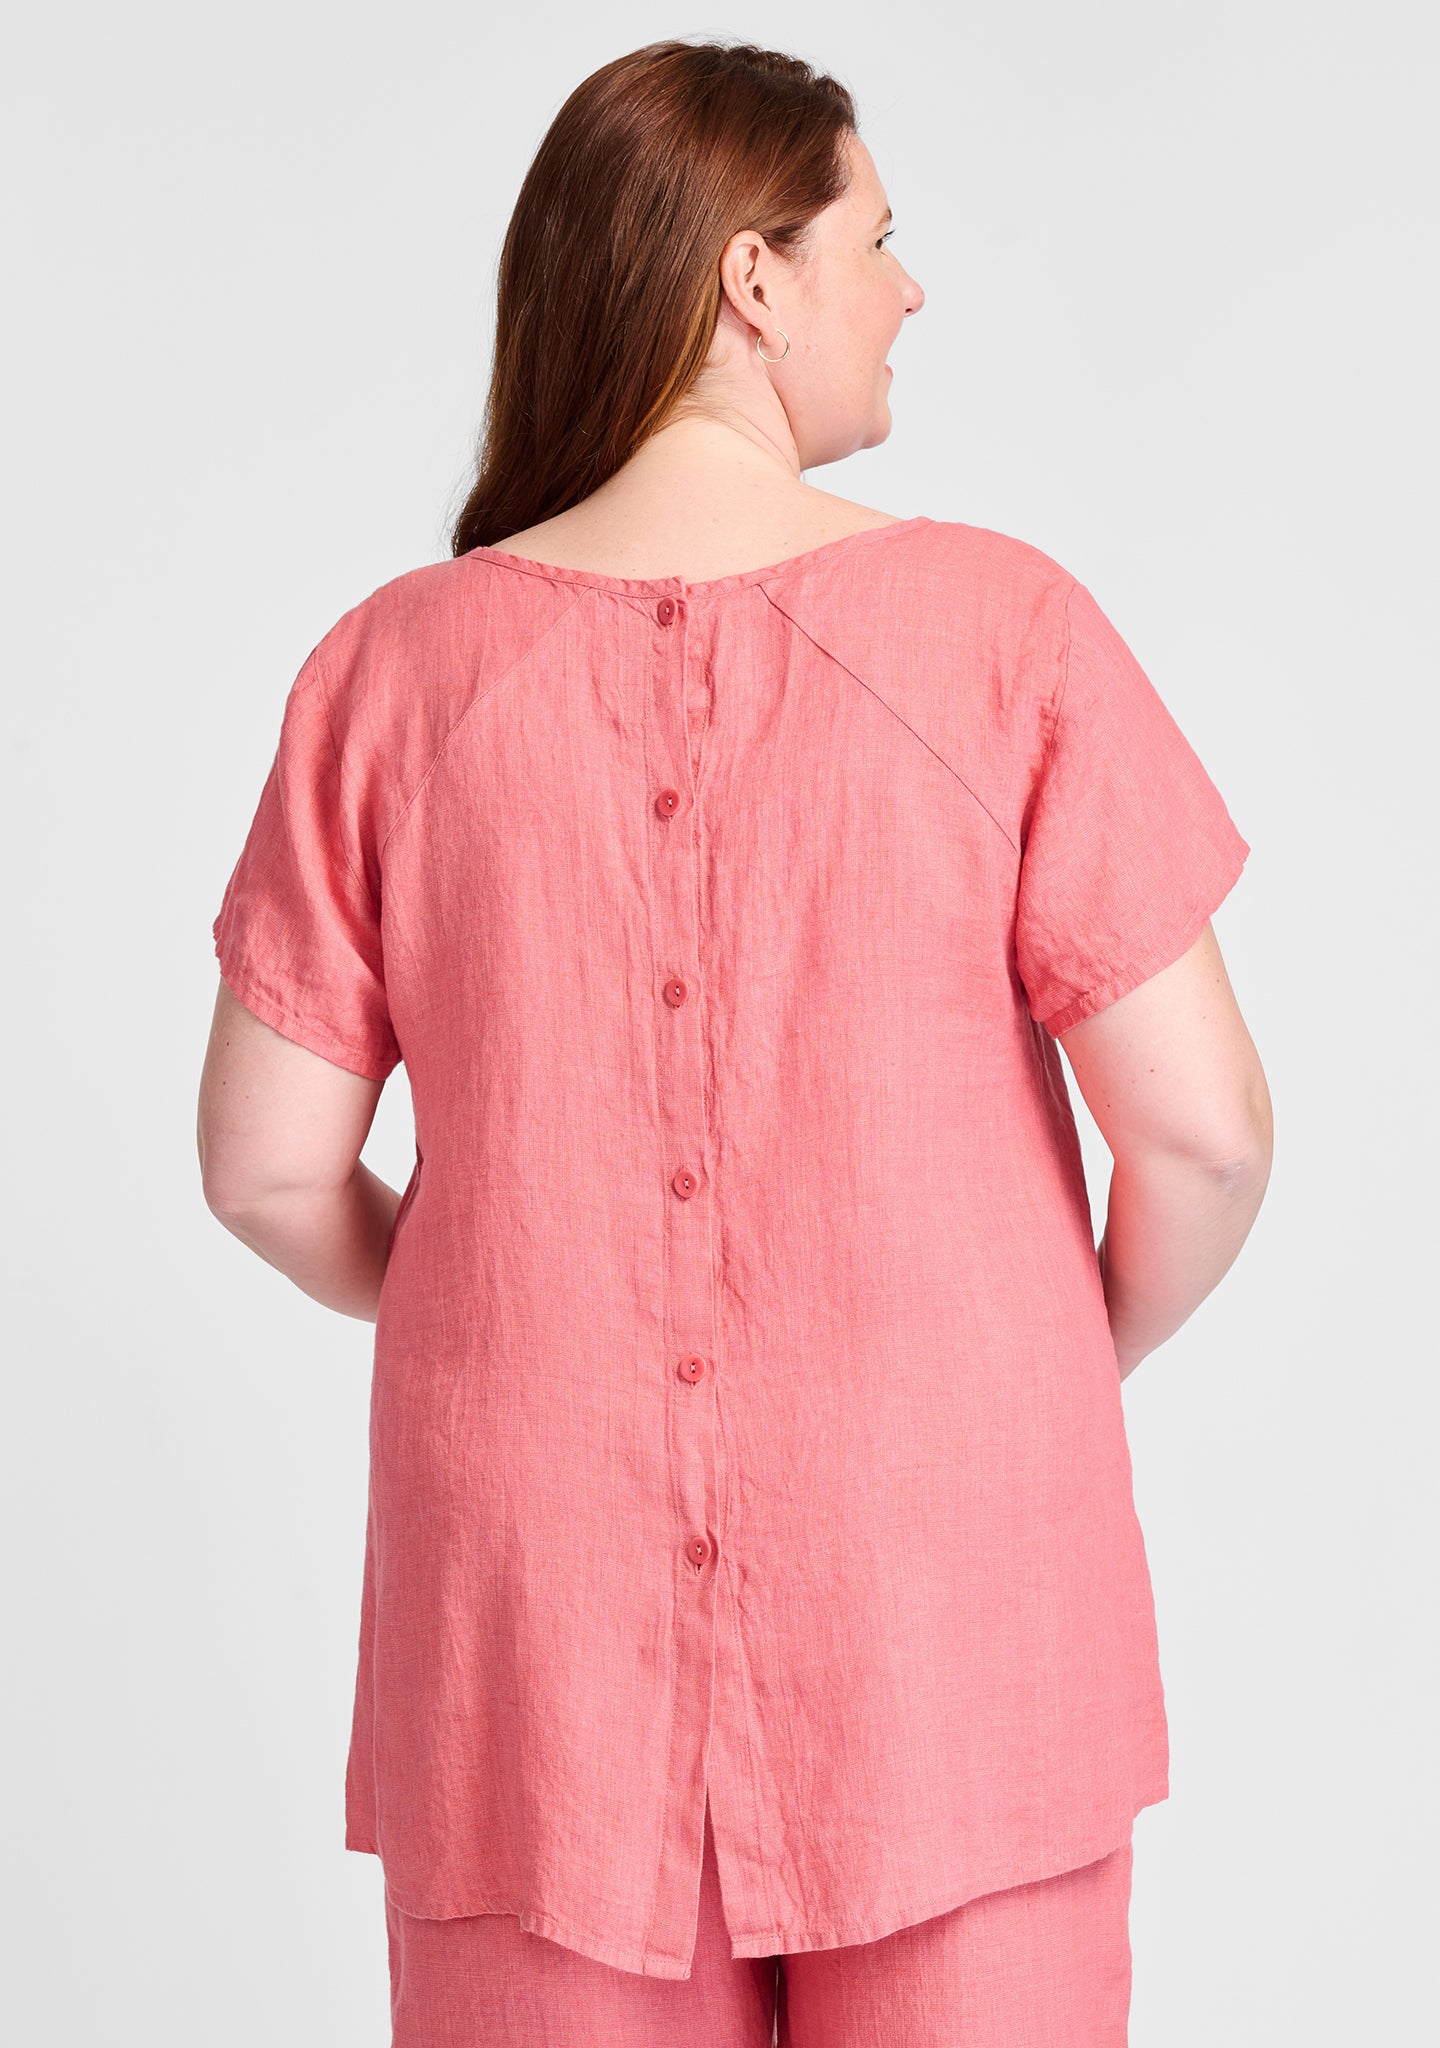 blossom blouse linen shirt details